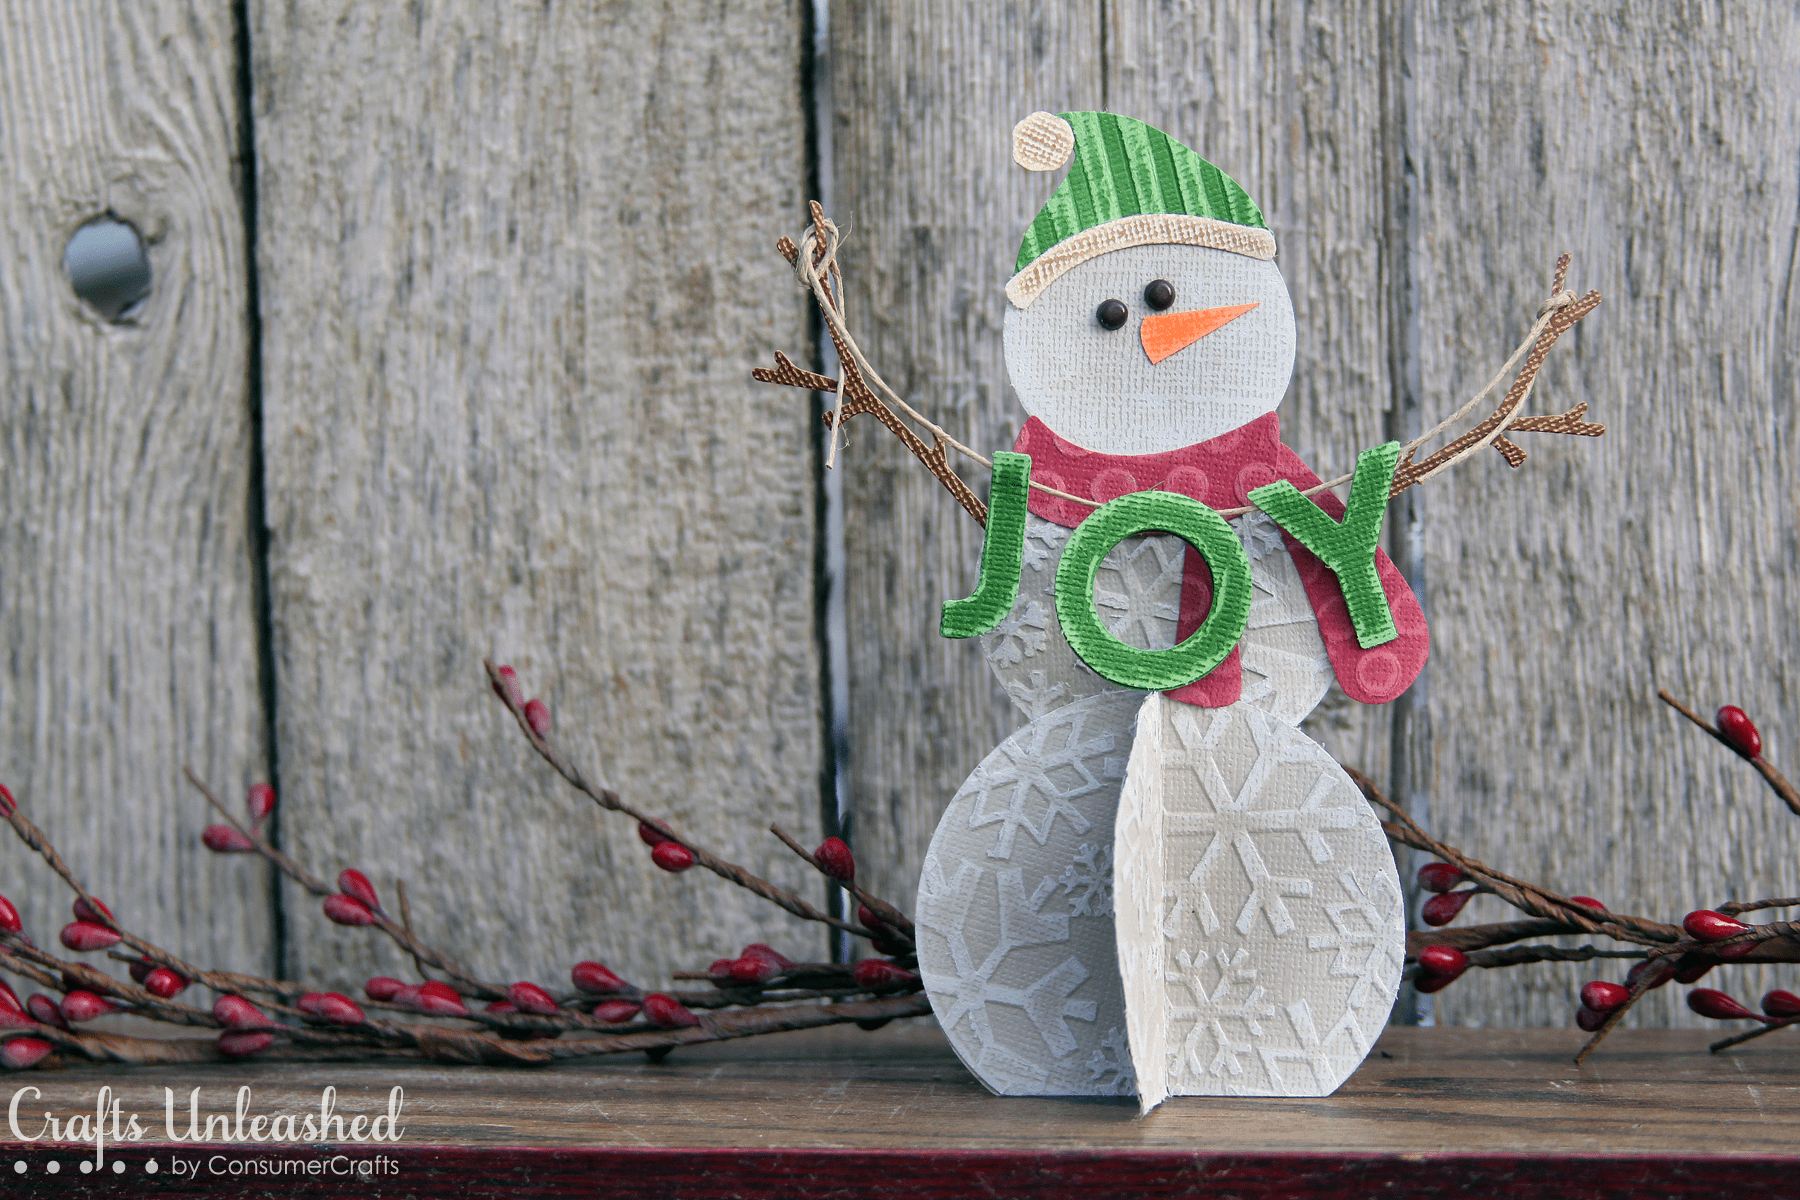 Standing textured paper snowman